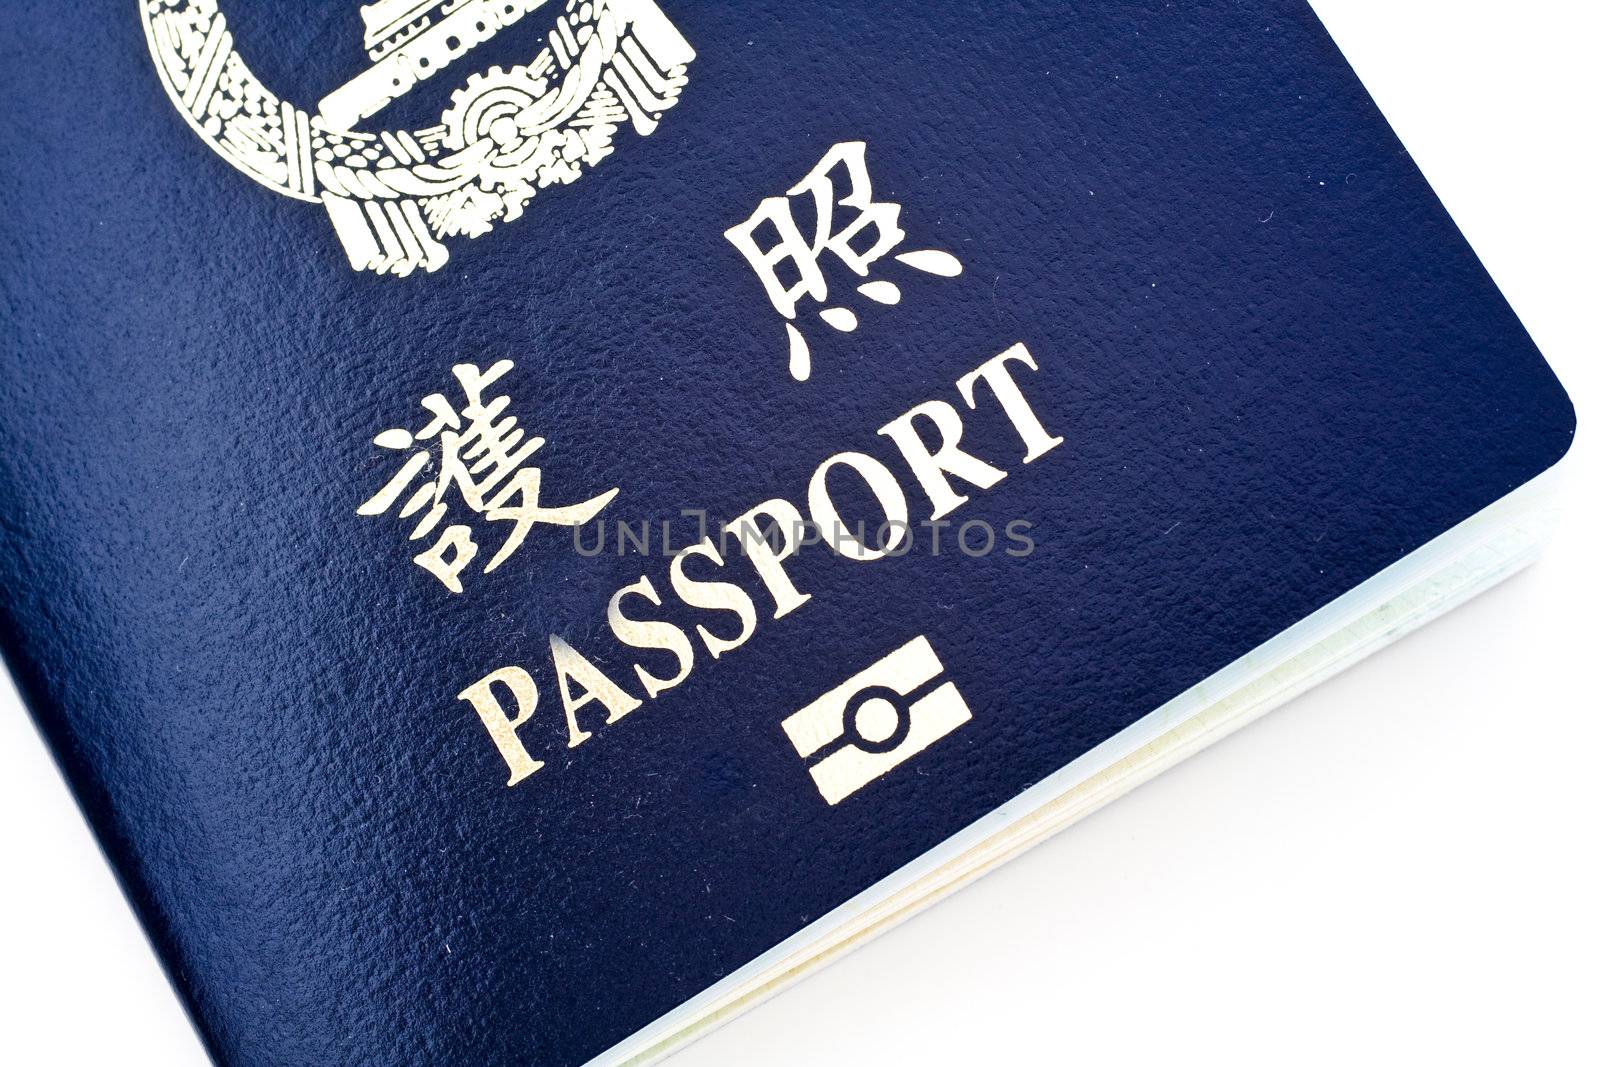 It is a close shot of passport